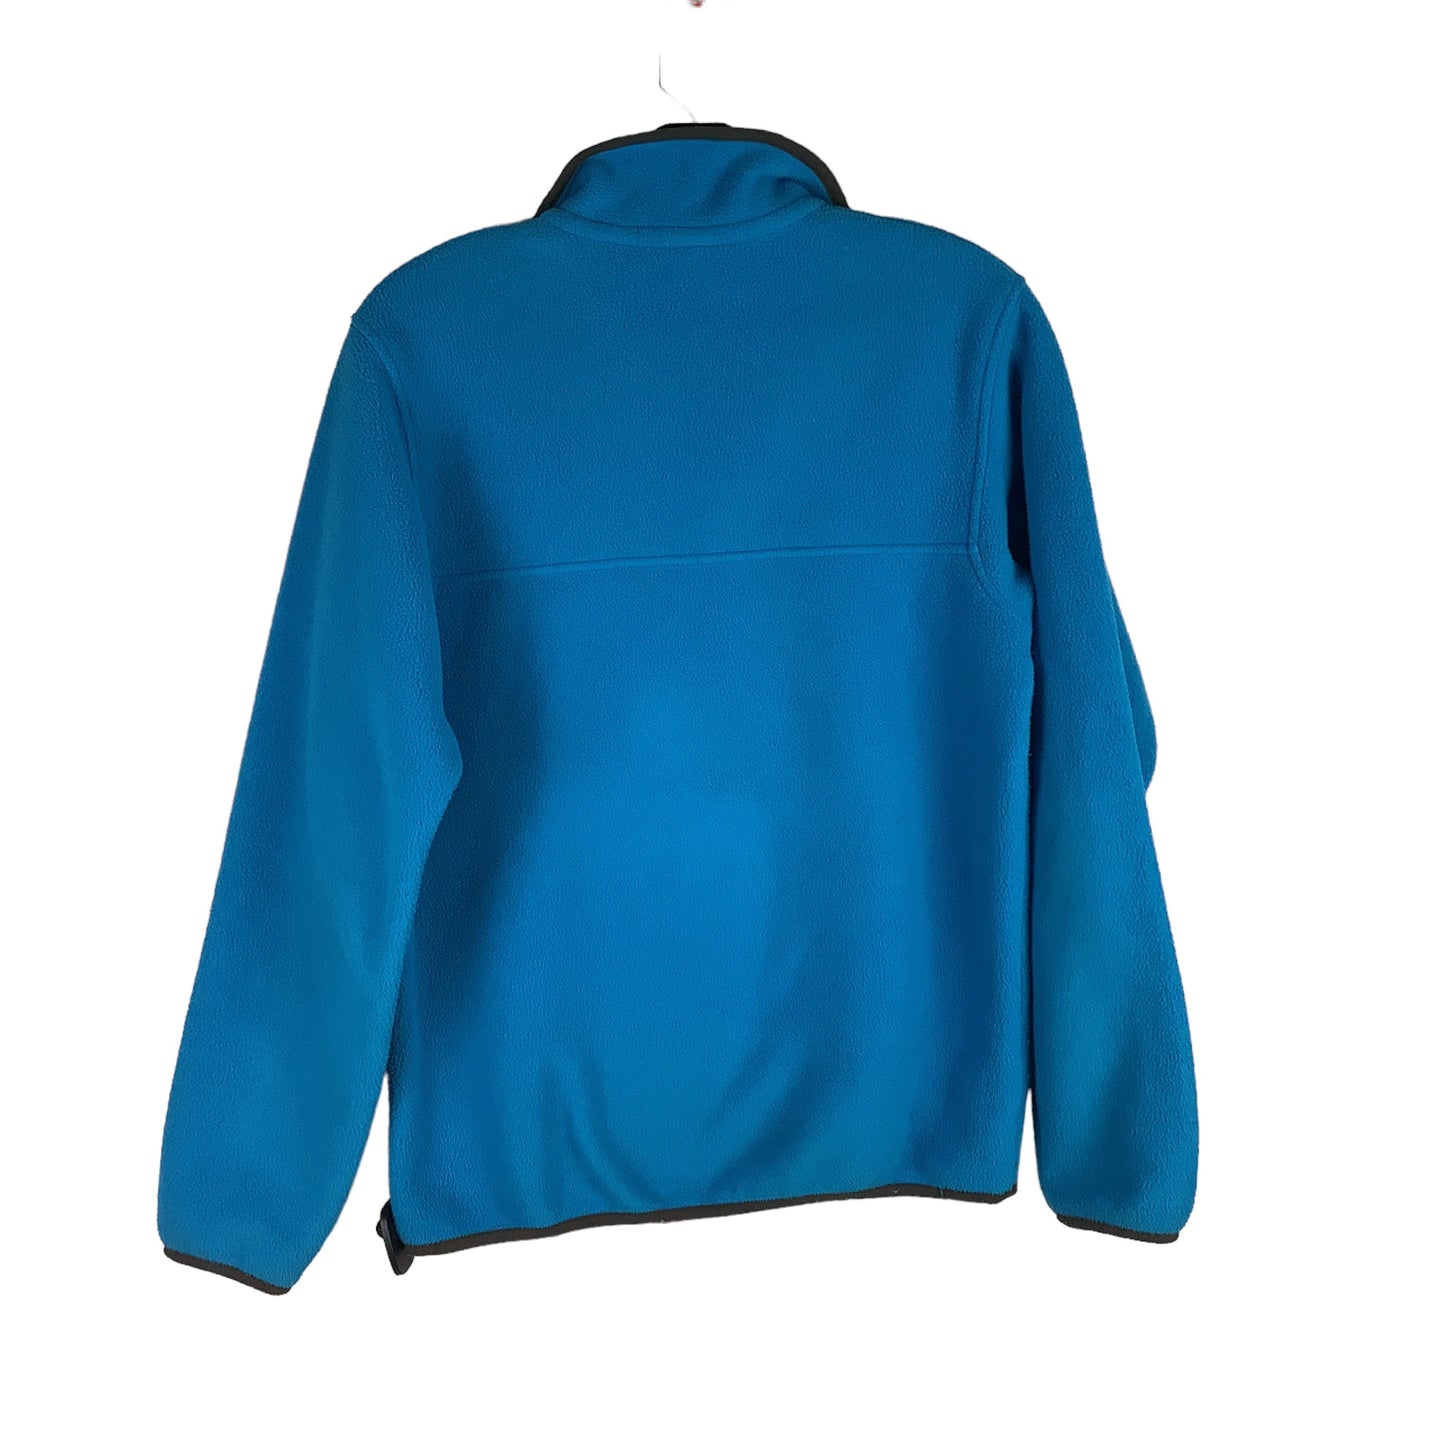 Jacket Designer By Patagonia  Size: S